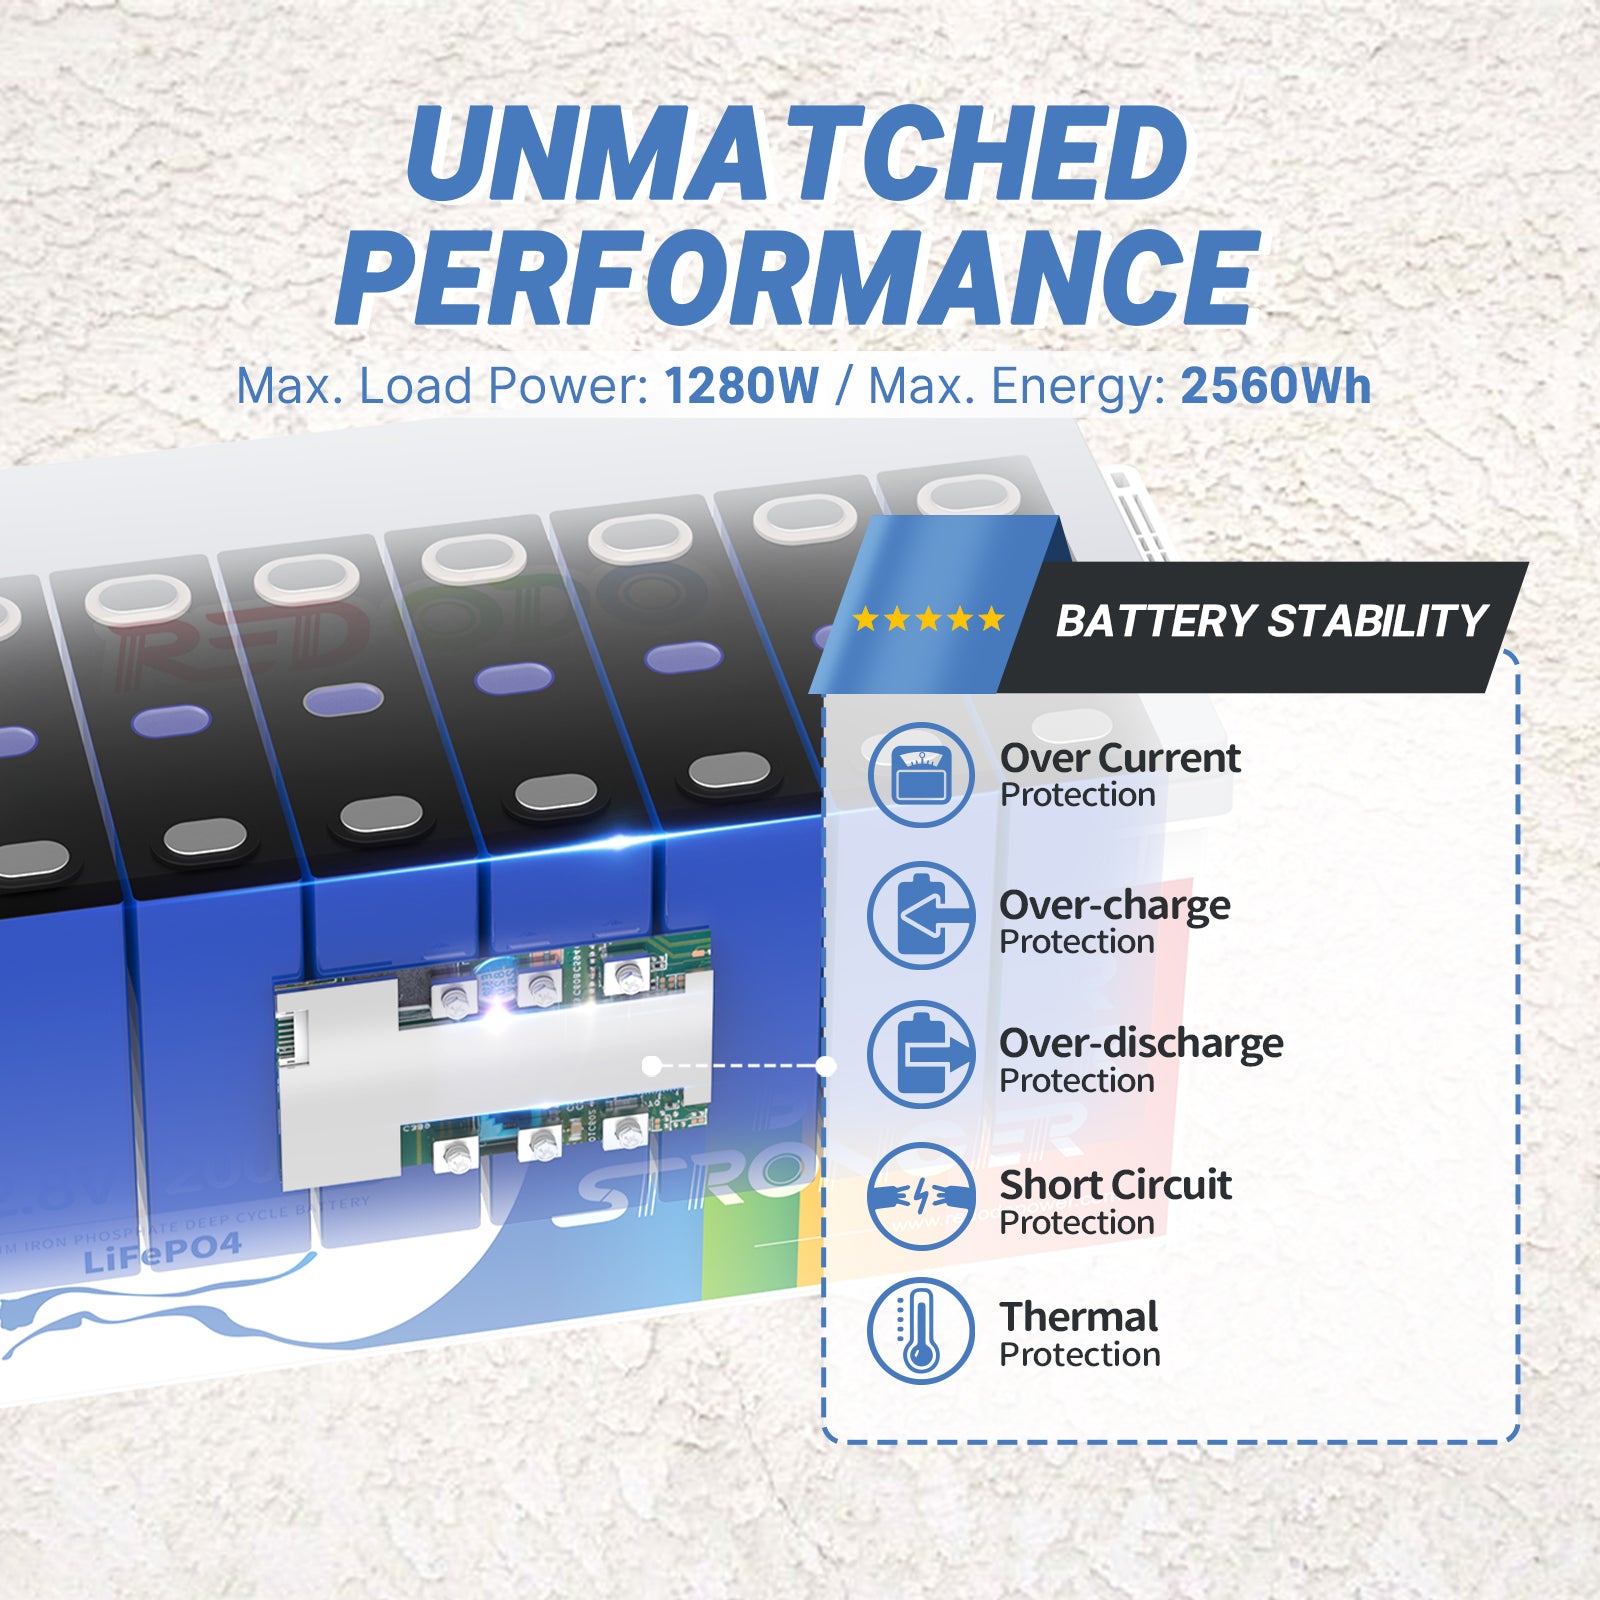 Like New-Redodo 12V 200Ah LiFePO4 Battery | 2.56kWh & 1.28kW